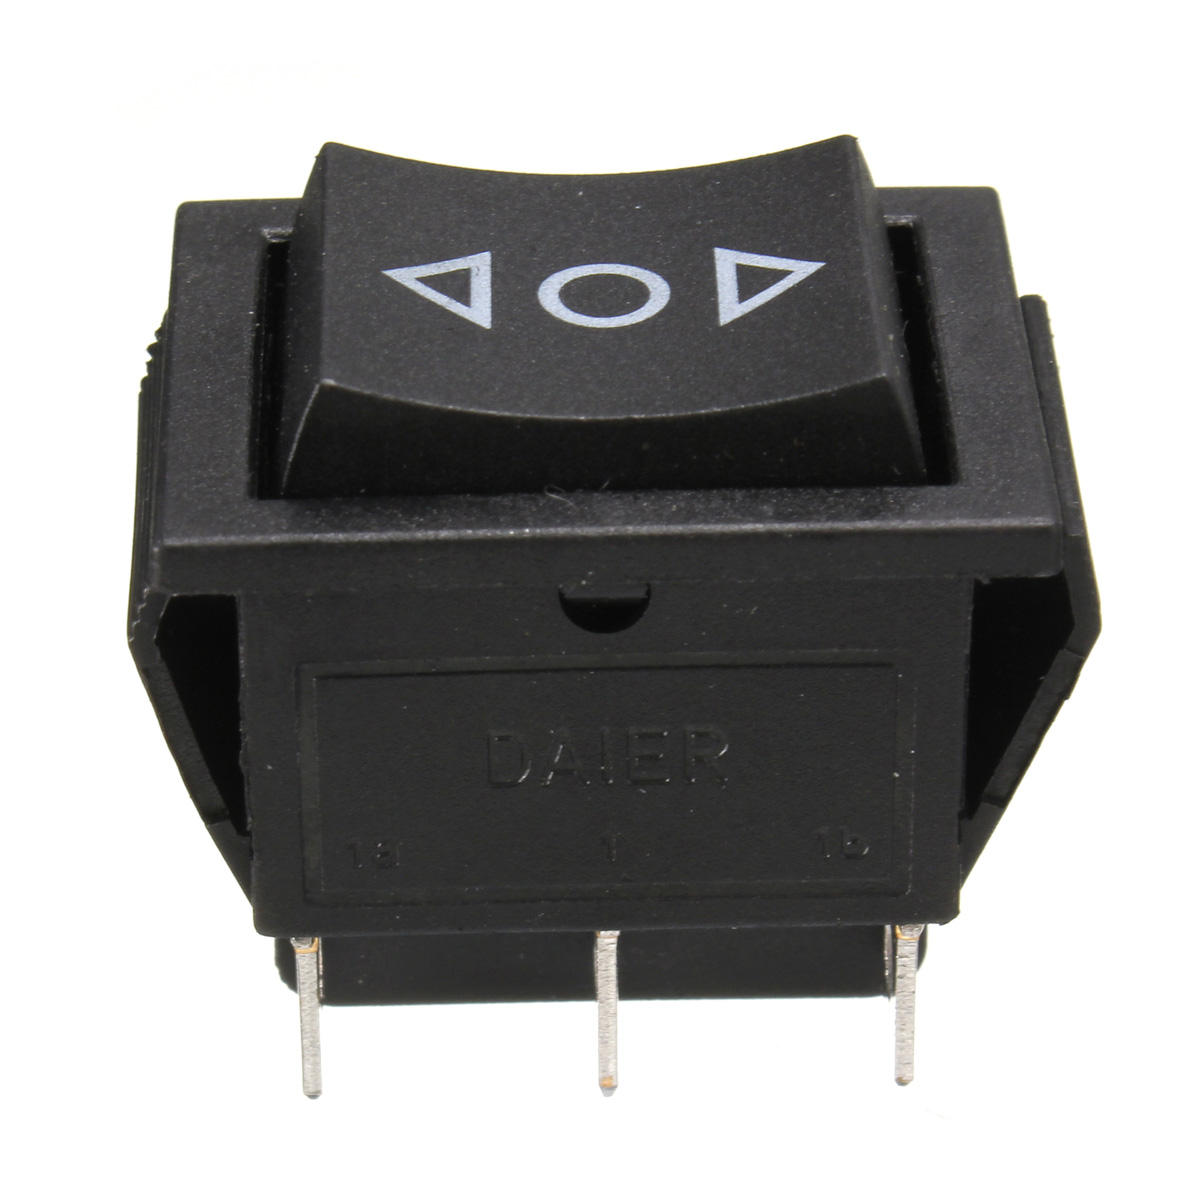 6-pins 12V DPDT Power Window Momentary Rocker Switch AC 250V / 10A 125V / 15A